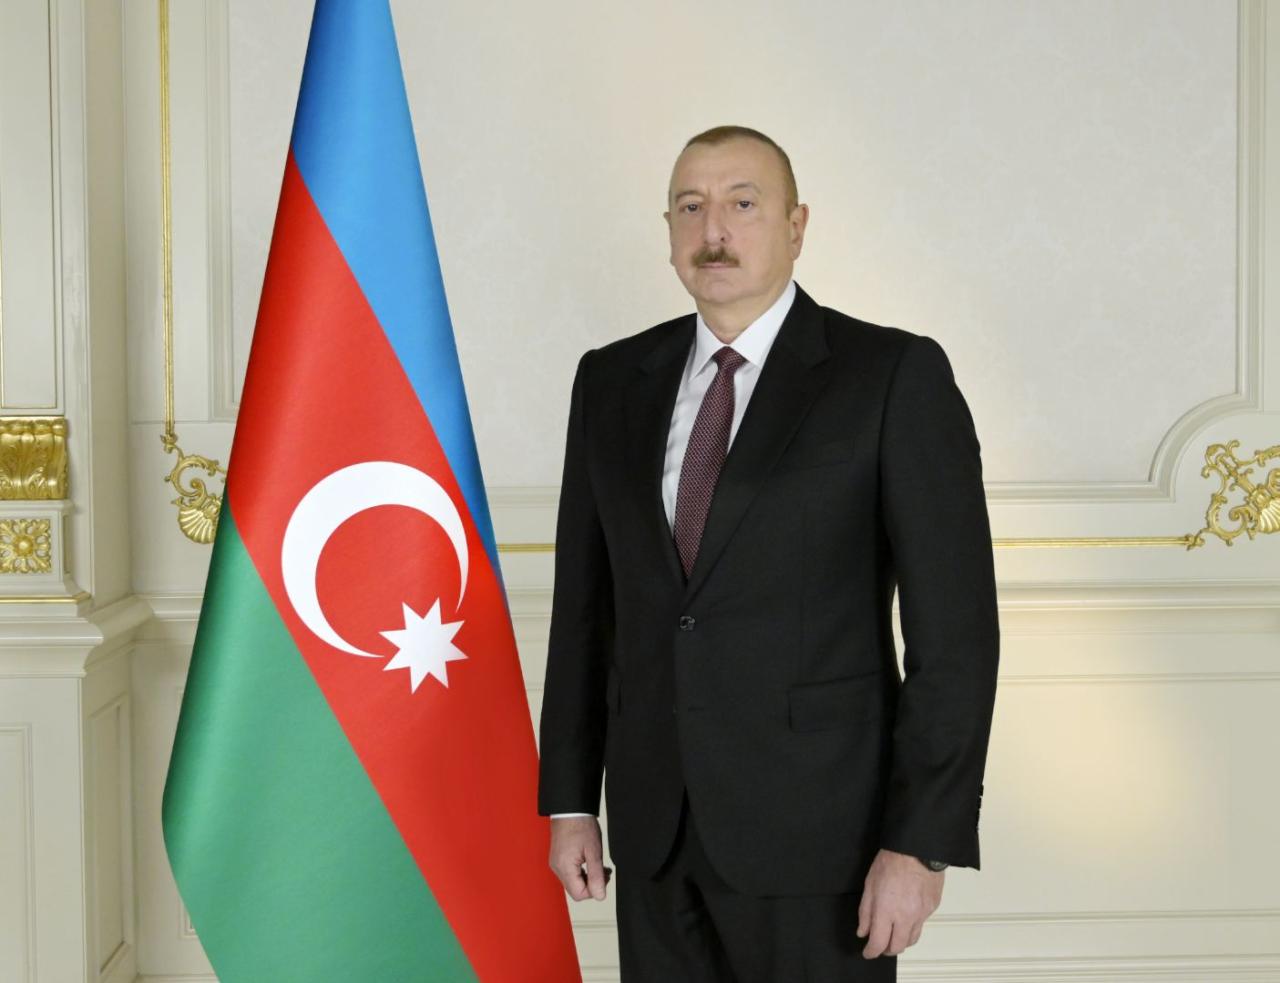 President of Azerbaijan sends letter to President-elect of Moldova